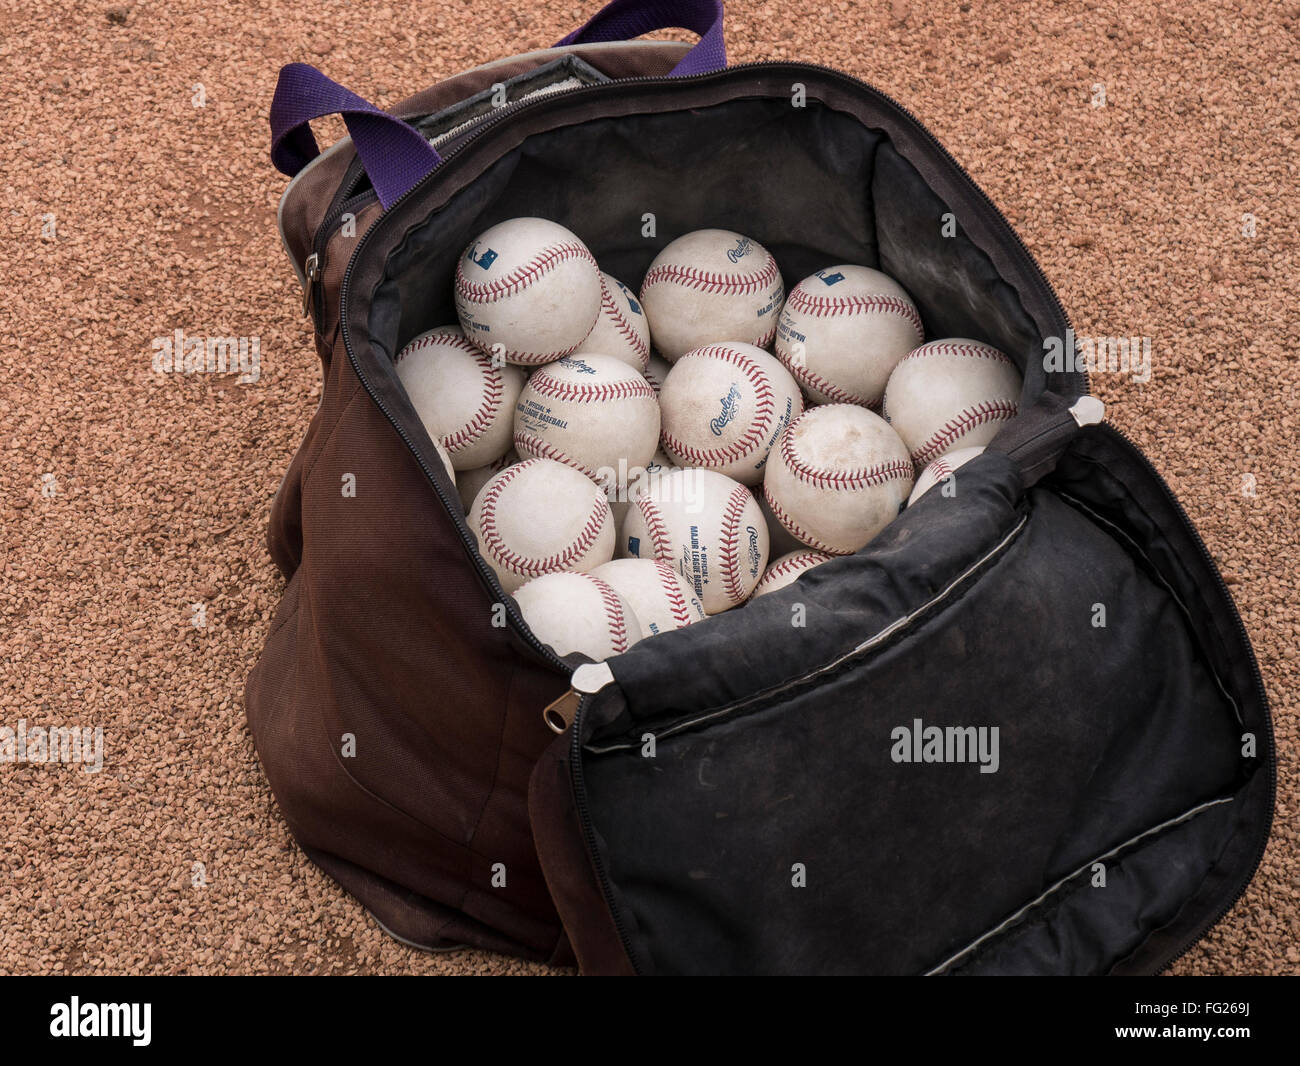 Bag of balls in the bullpin, Maryvale Baseball Park, Phoenix, Arizona Stock  Photo - Alamy